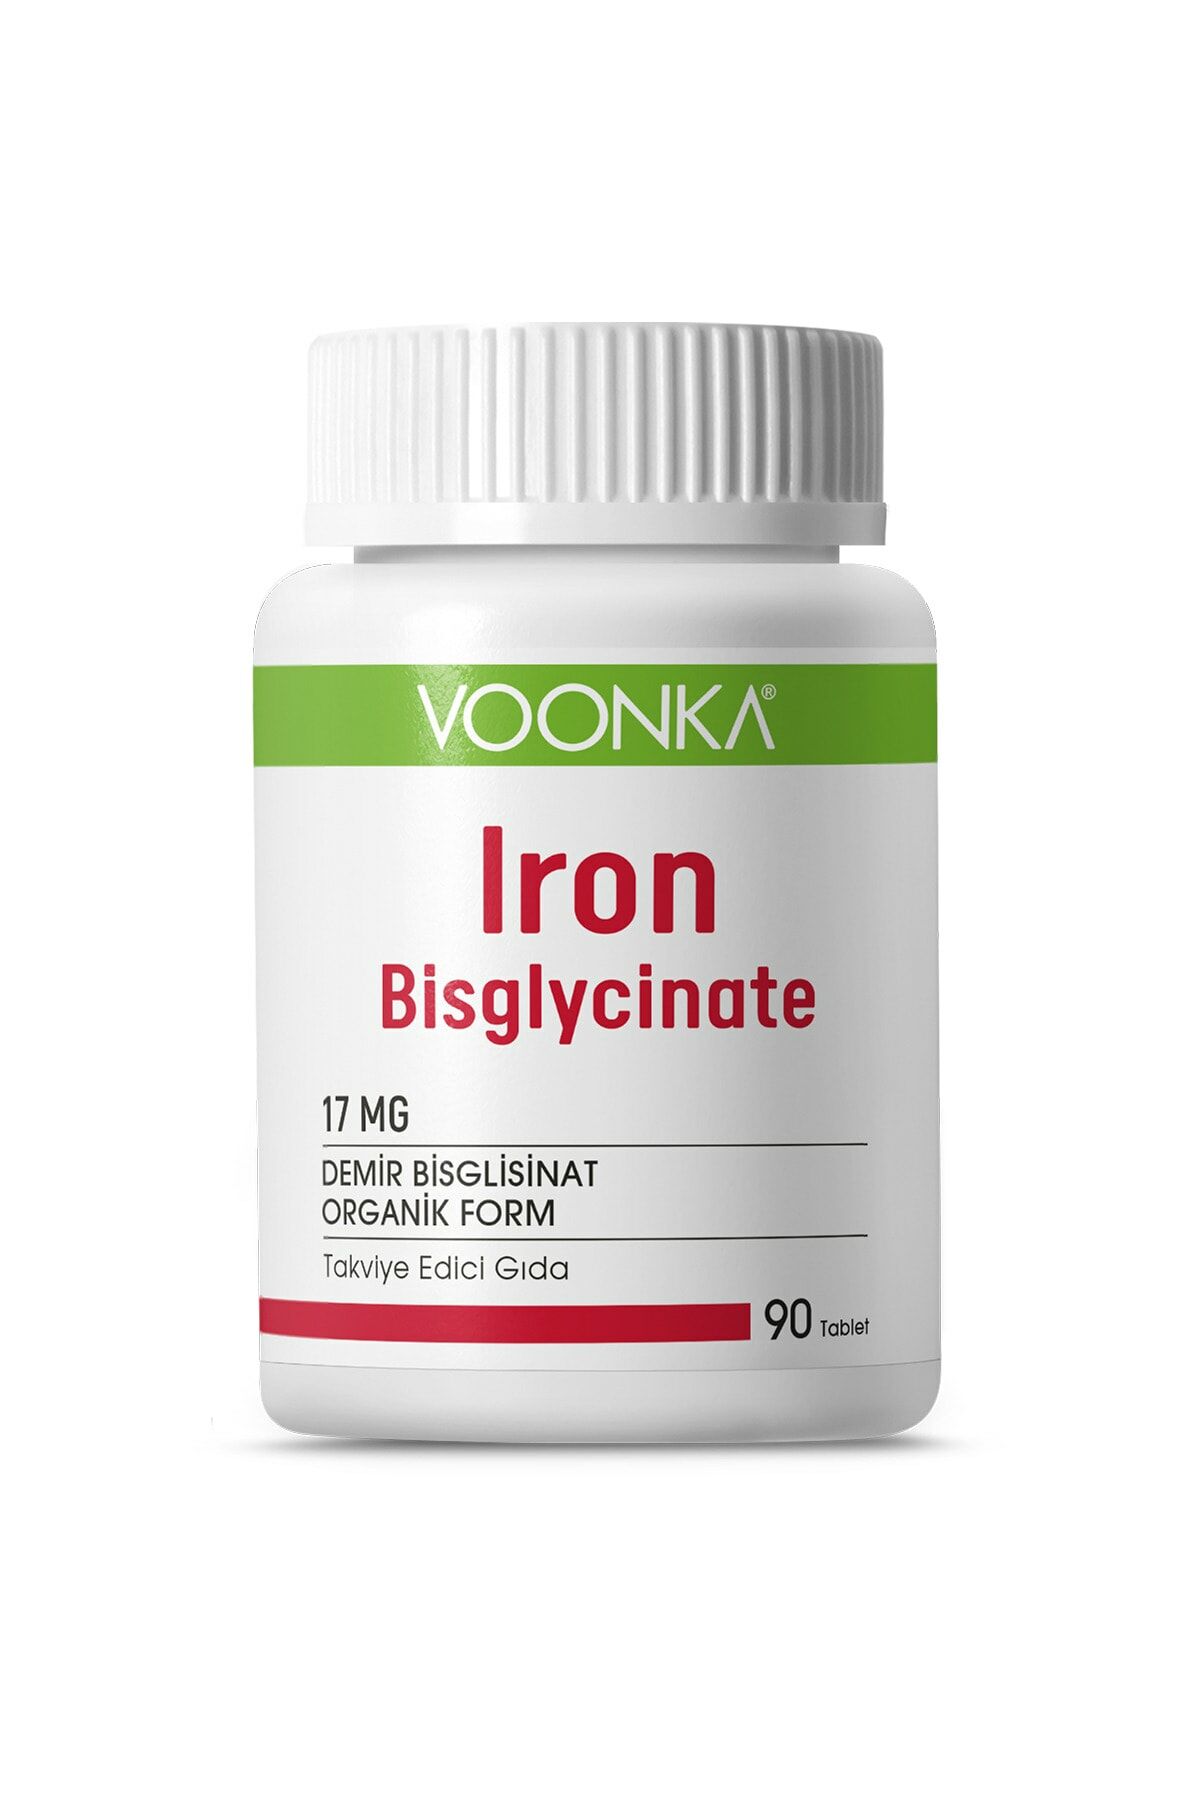 Voonka Iron Bisglycinate 90 Tablet